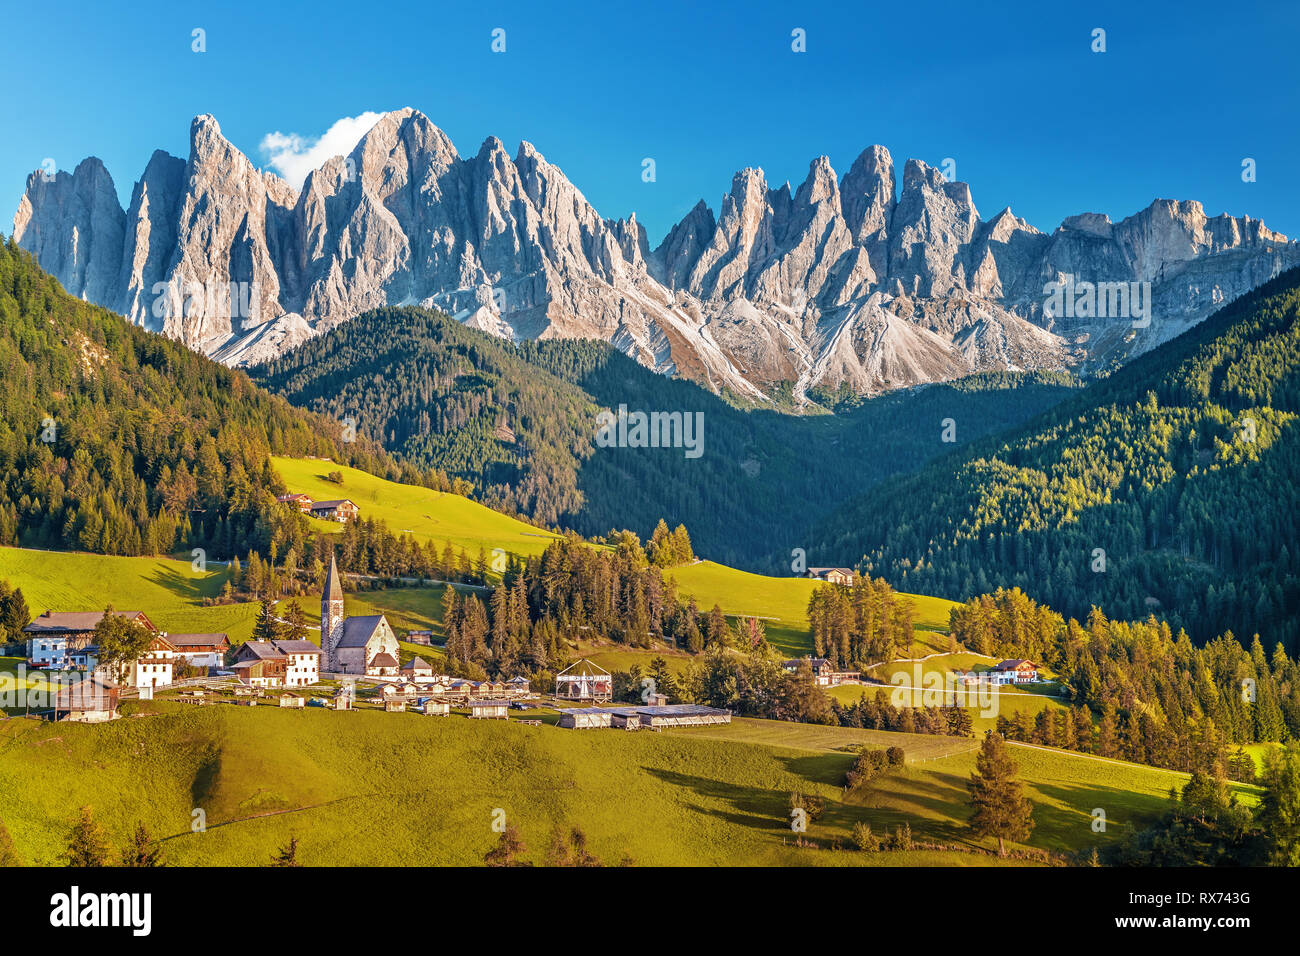 Berühmte alpine Ort Santa Maddalena Dorf mit magischen Dolomiten Berge im Hintergrund, Val di Funes Tal, Trentino Alto Adige, Italien Stockfoto